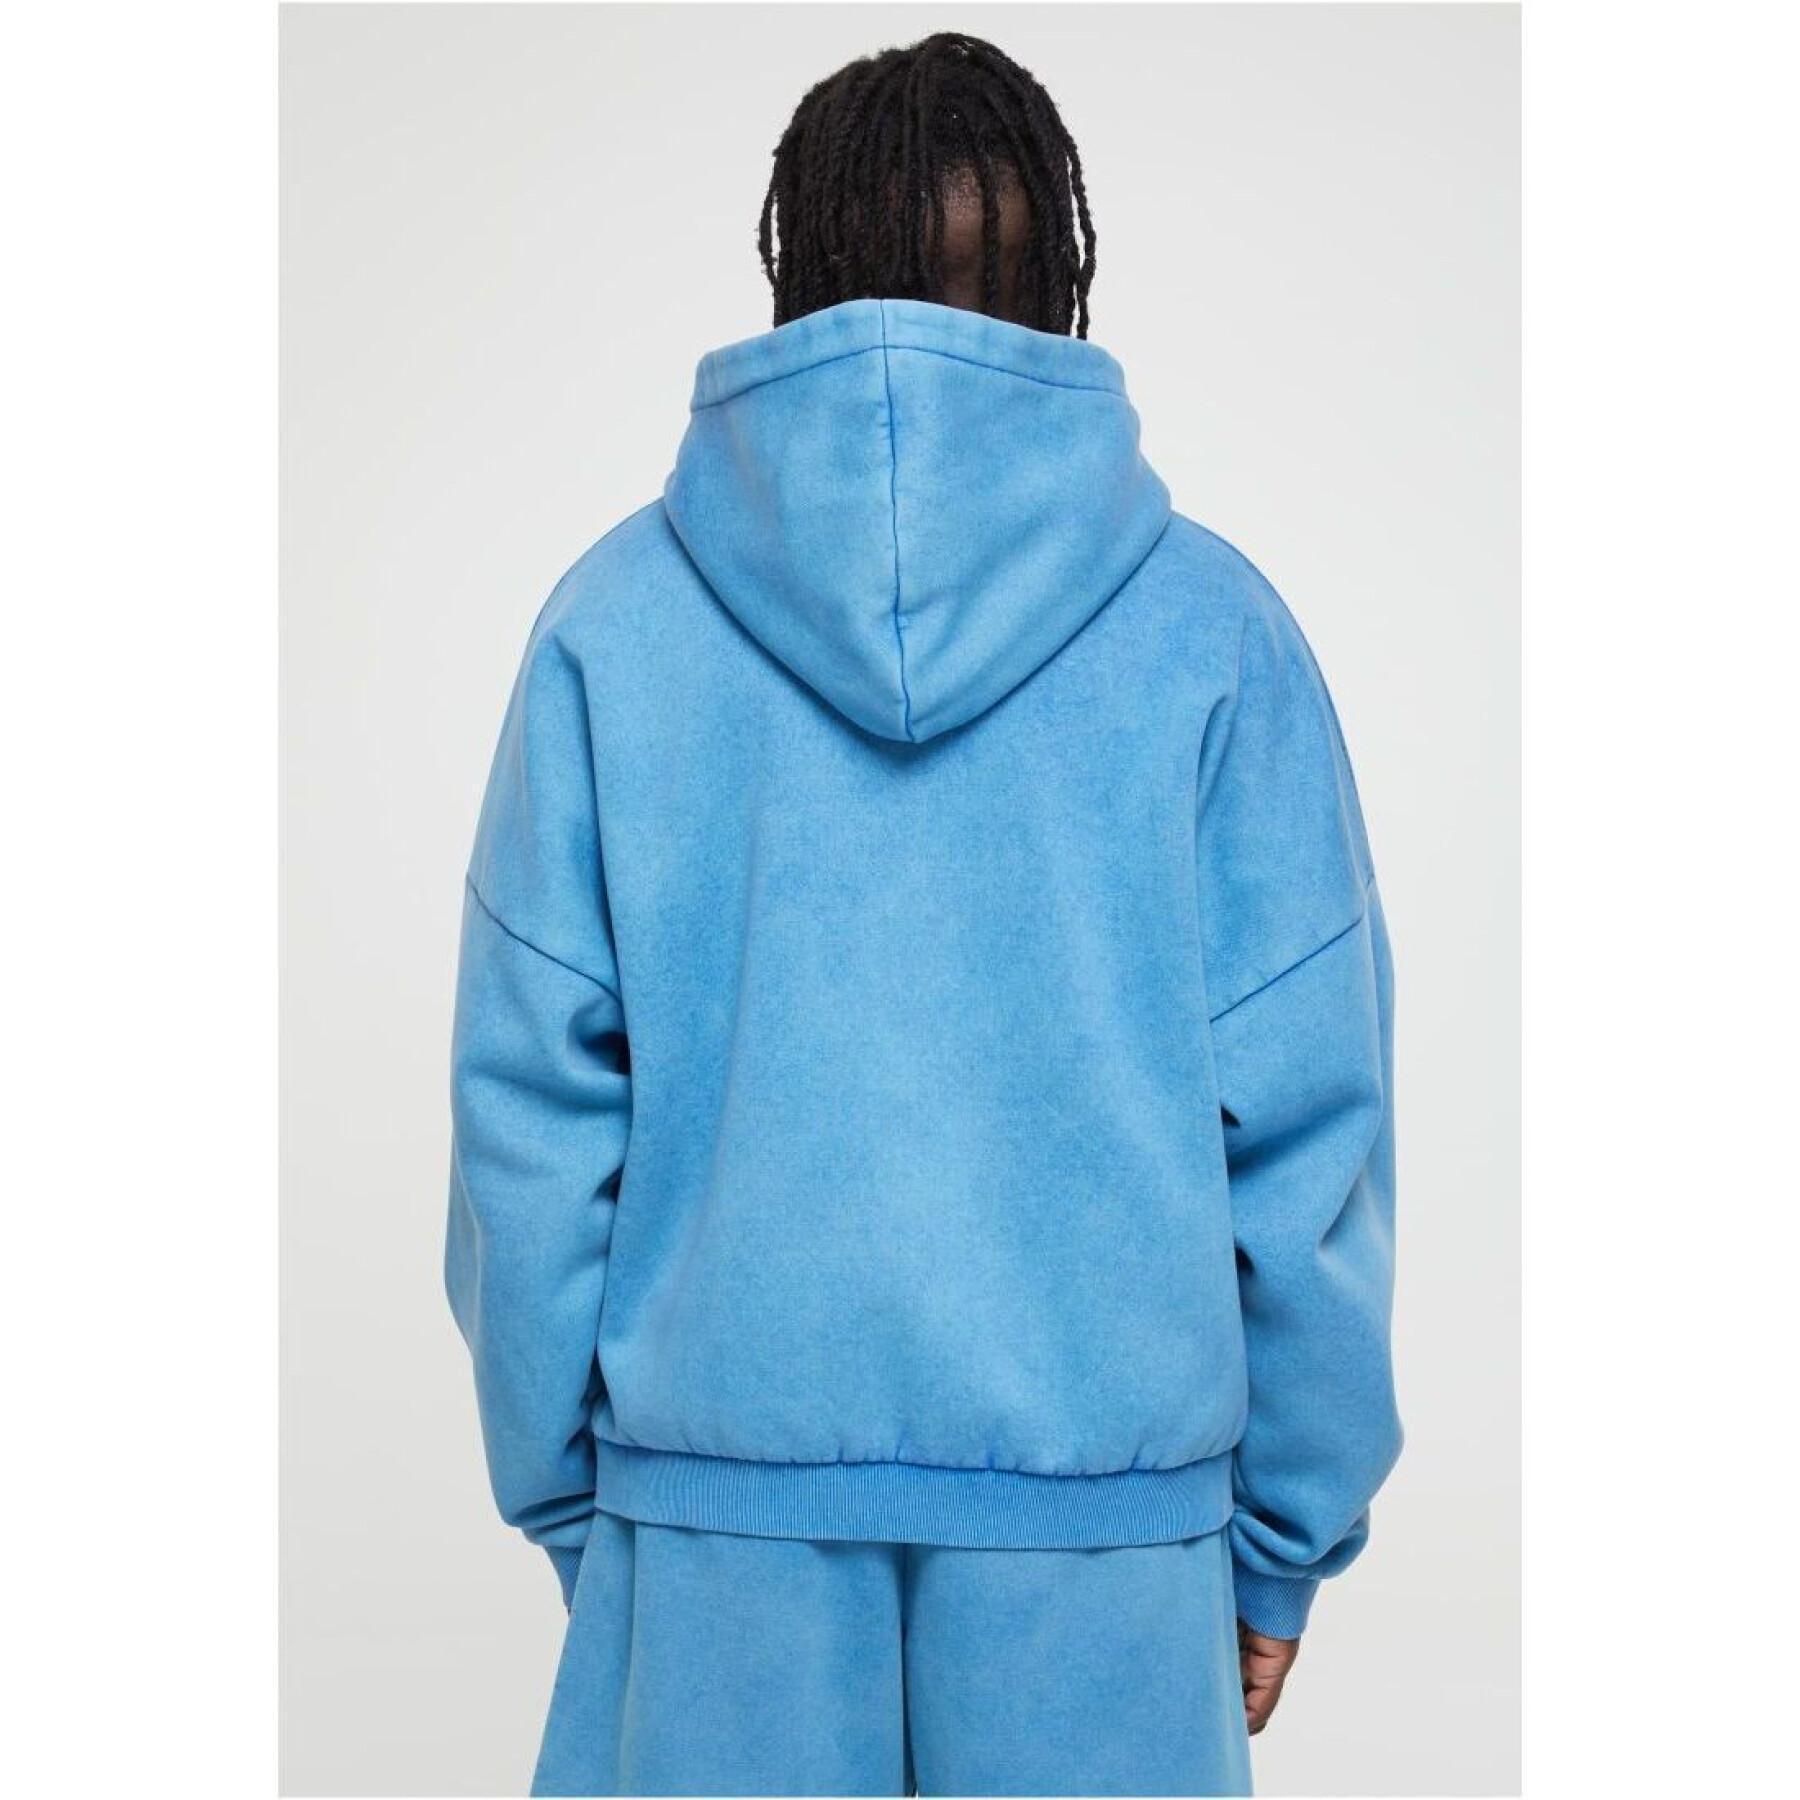 Sweats - - Classics Hoodies Urban Zip-up 90\'s Heavy - Urban Sand & Streetwear Classics hoodie Washed Sweats